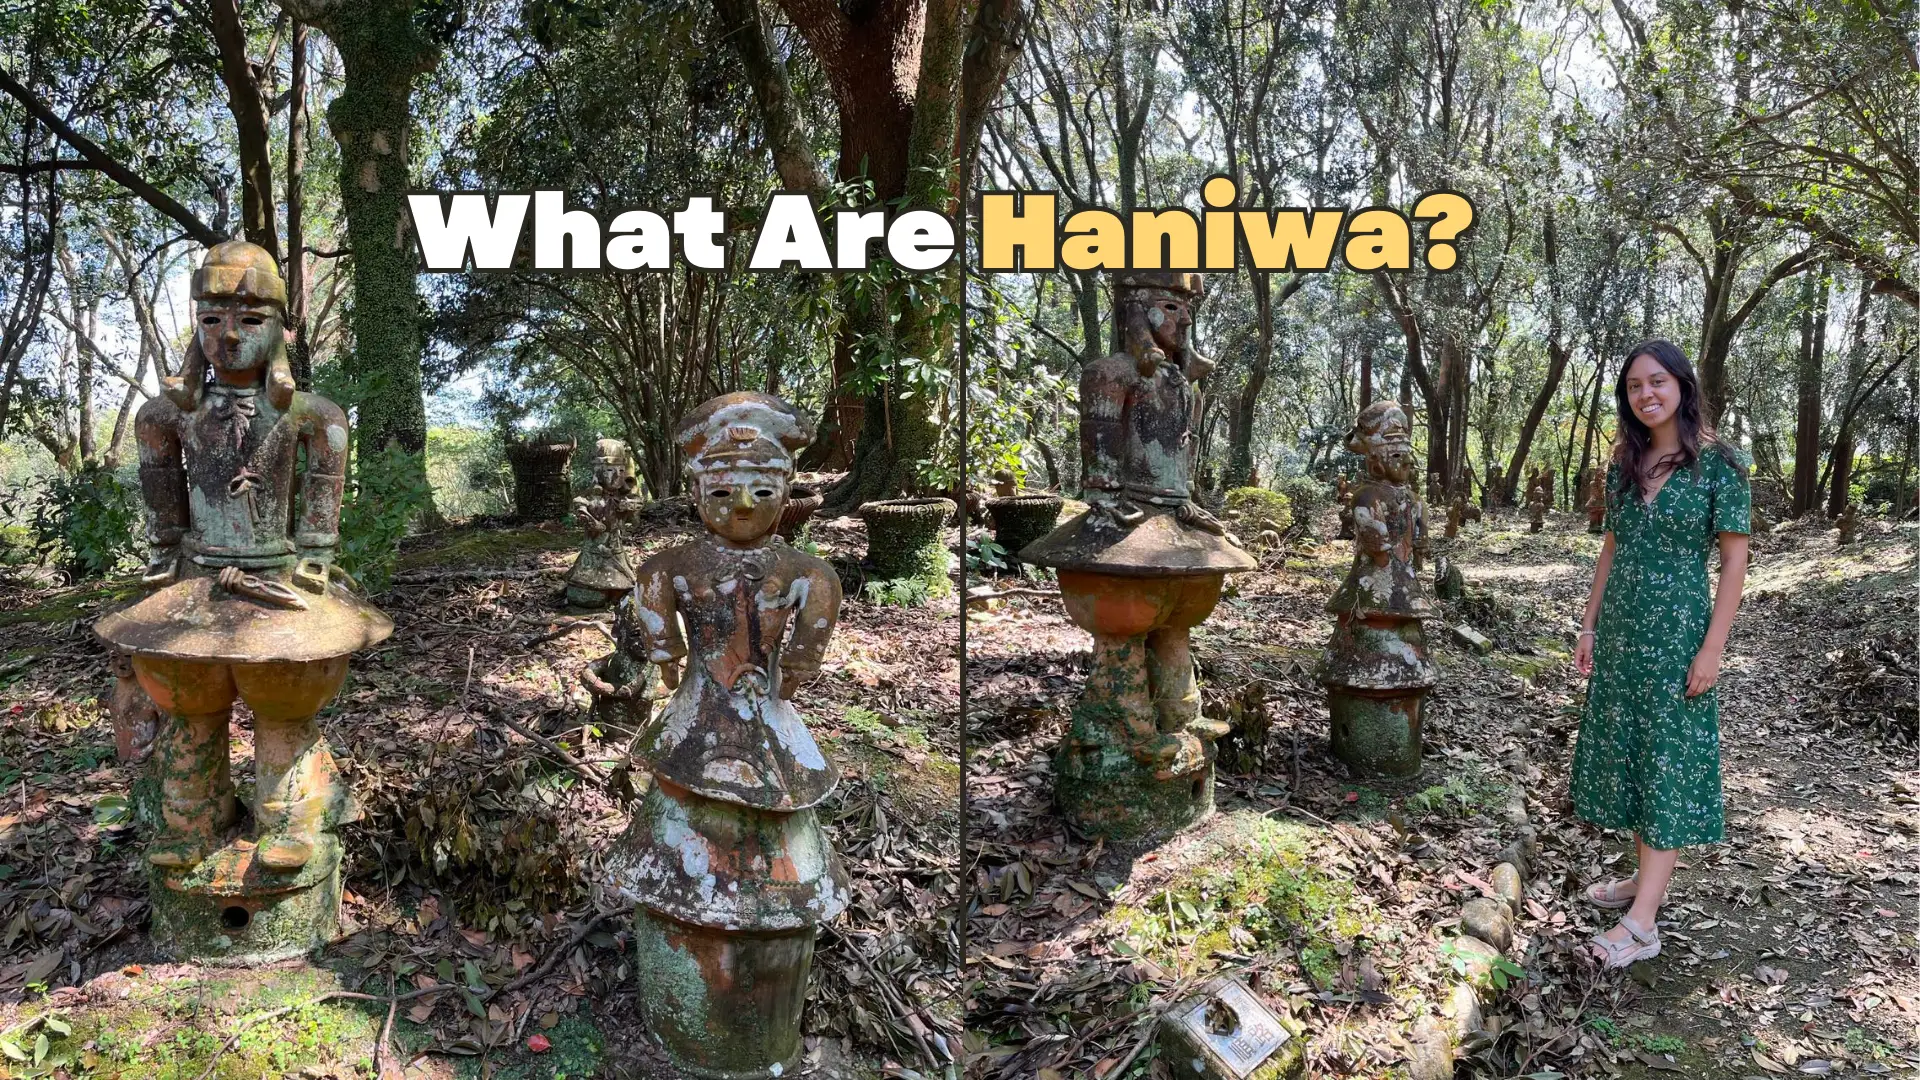 Have you heard of Haniwa?